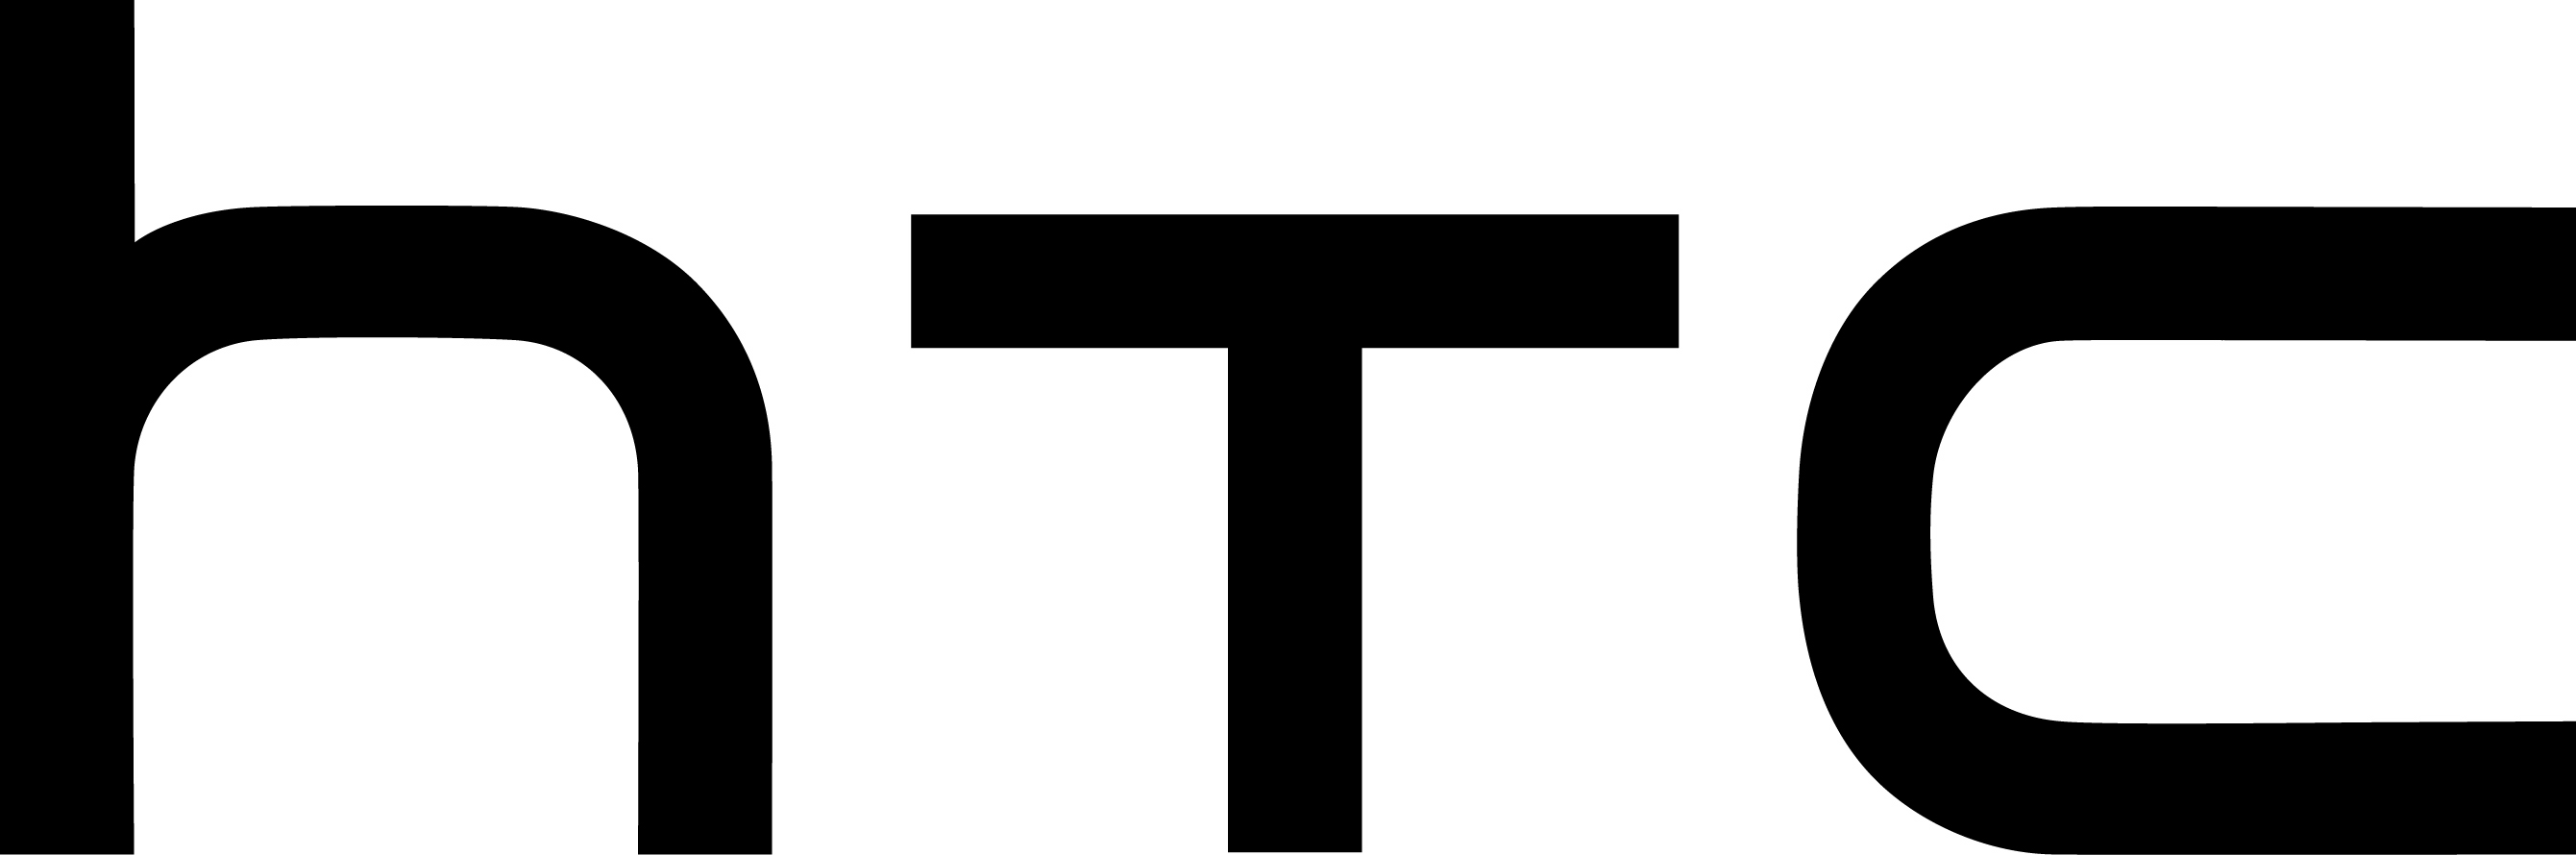 HTC:n logo